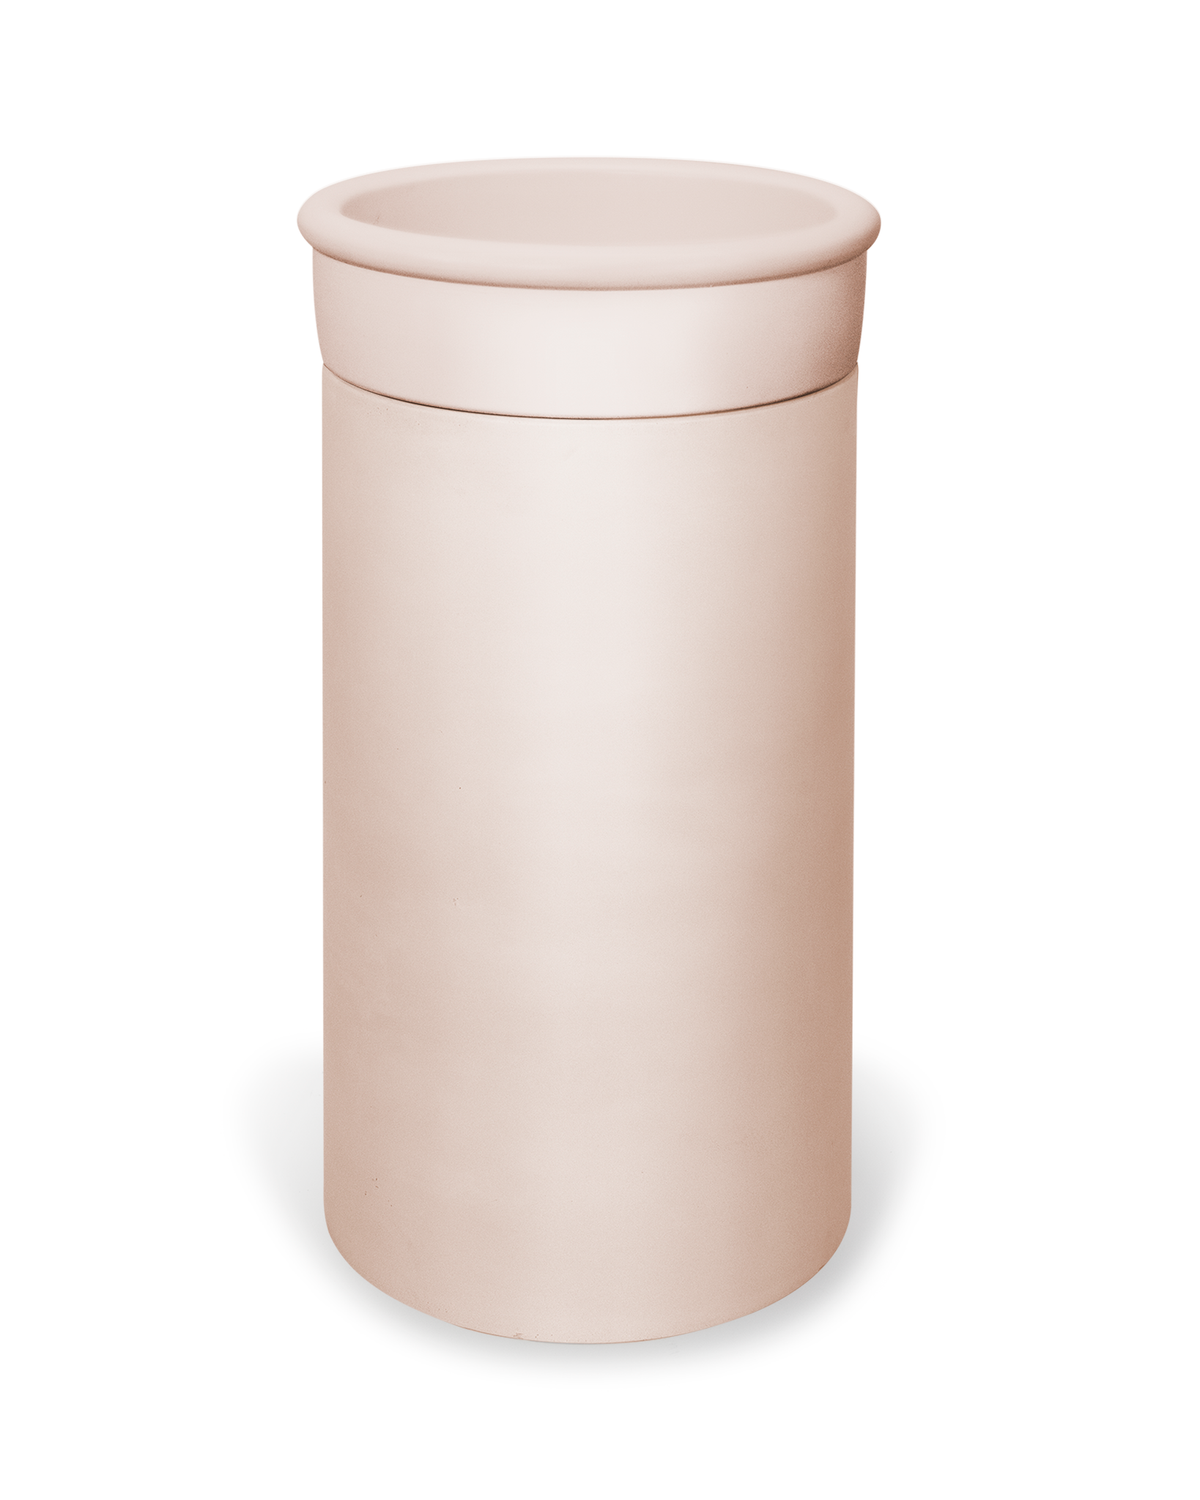 Cylinder - Tubb Basin (Pastel Peach)